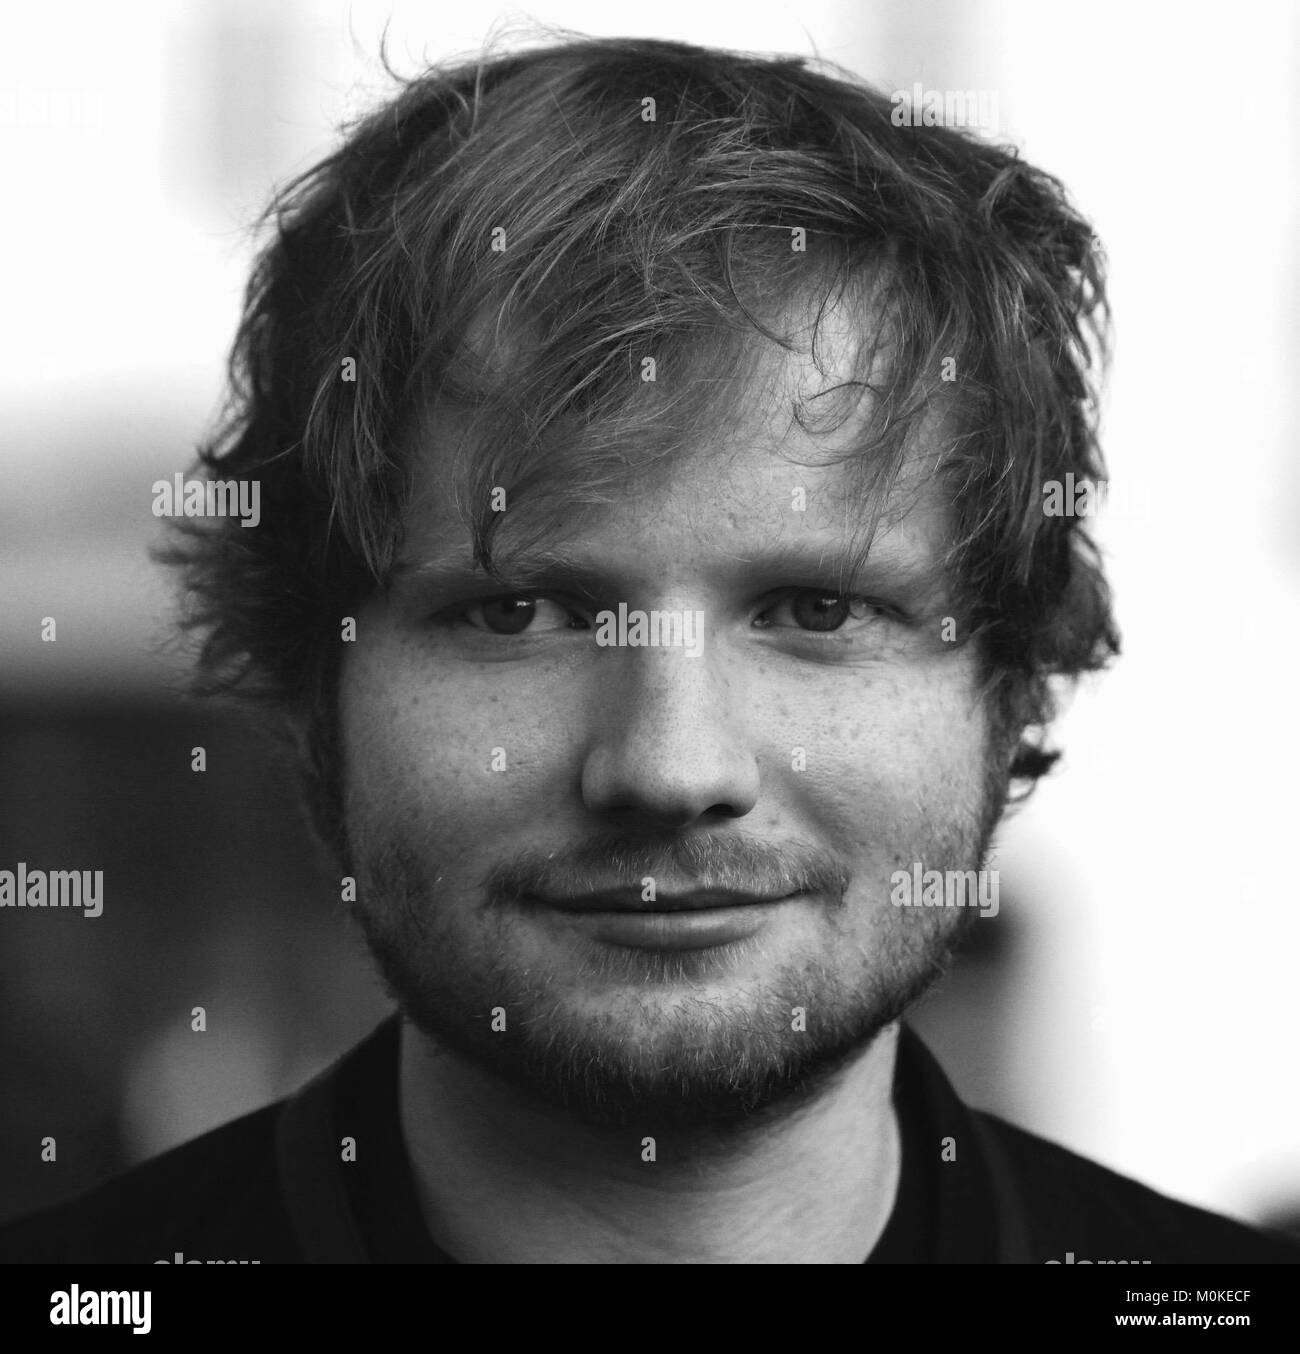 London, UK, 30. September 2014: Ed Sheeran gesehenes Verlassen BBC Studios in London (Bild digital geändert werden Schwarzweiß) Stockfoto